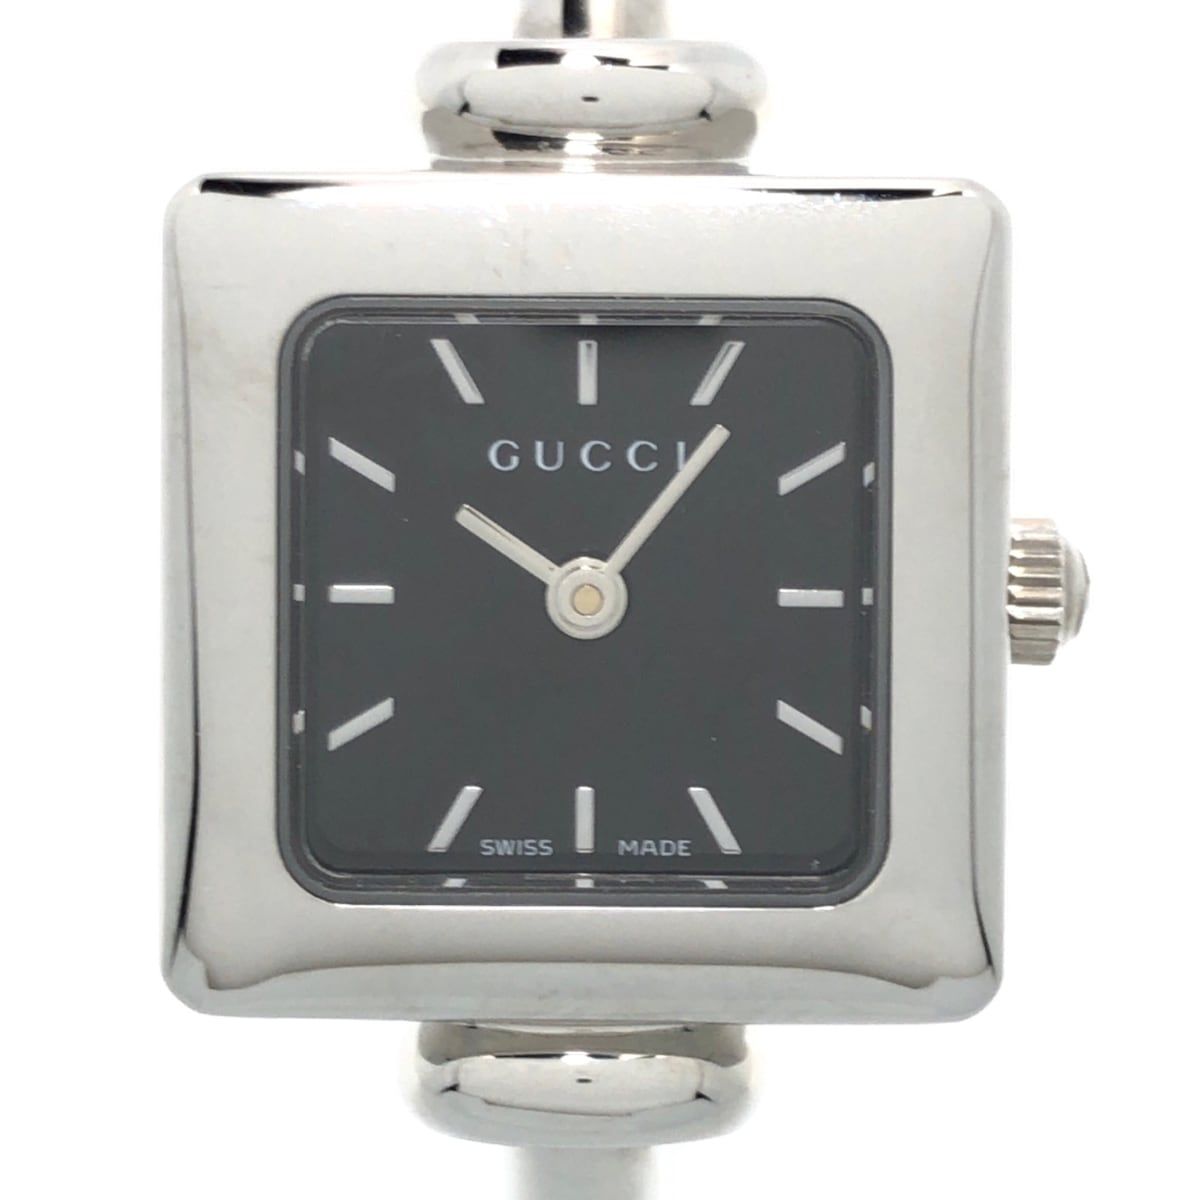 GUCCI(グッチ) 腕時計 1900L レディース 黒 - メルカリレディース